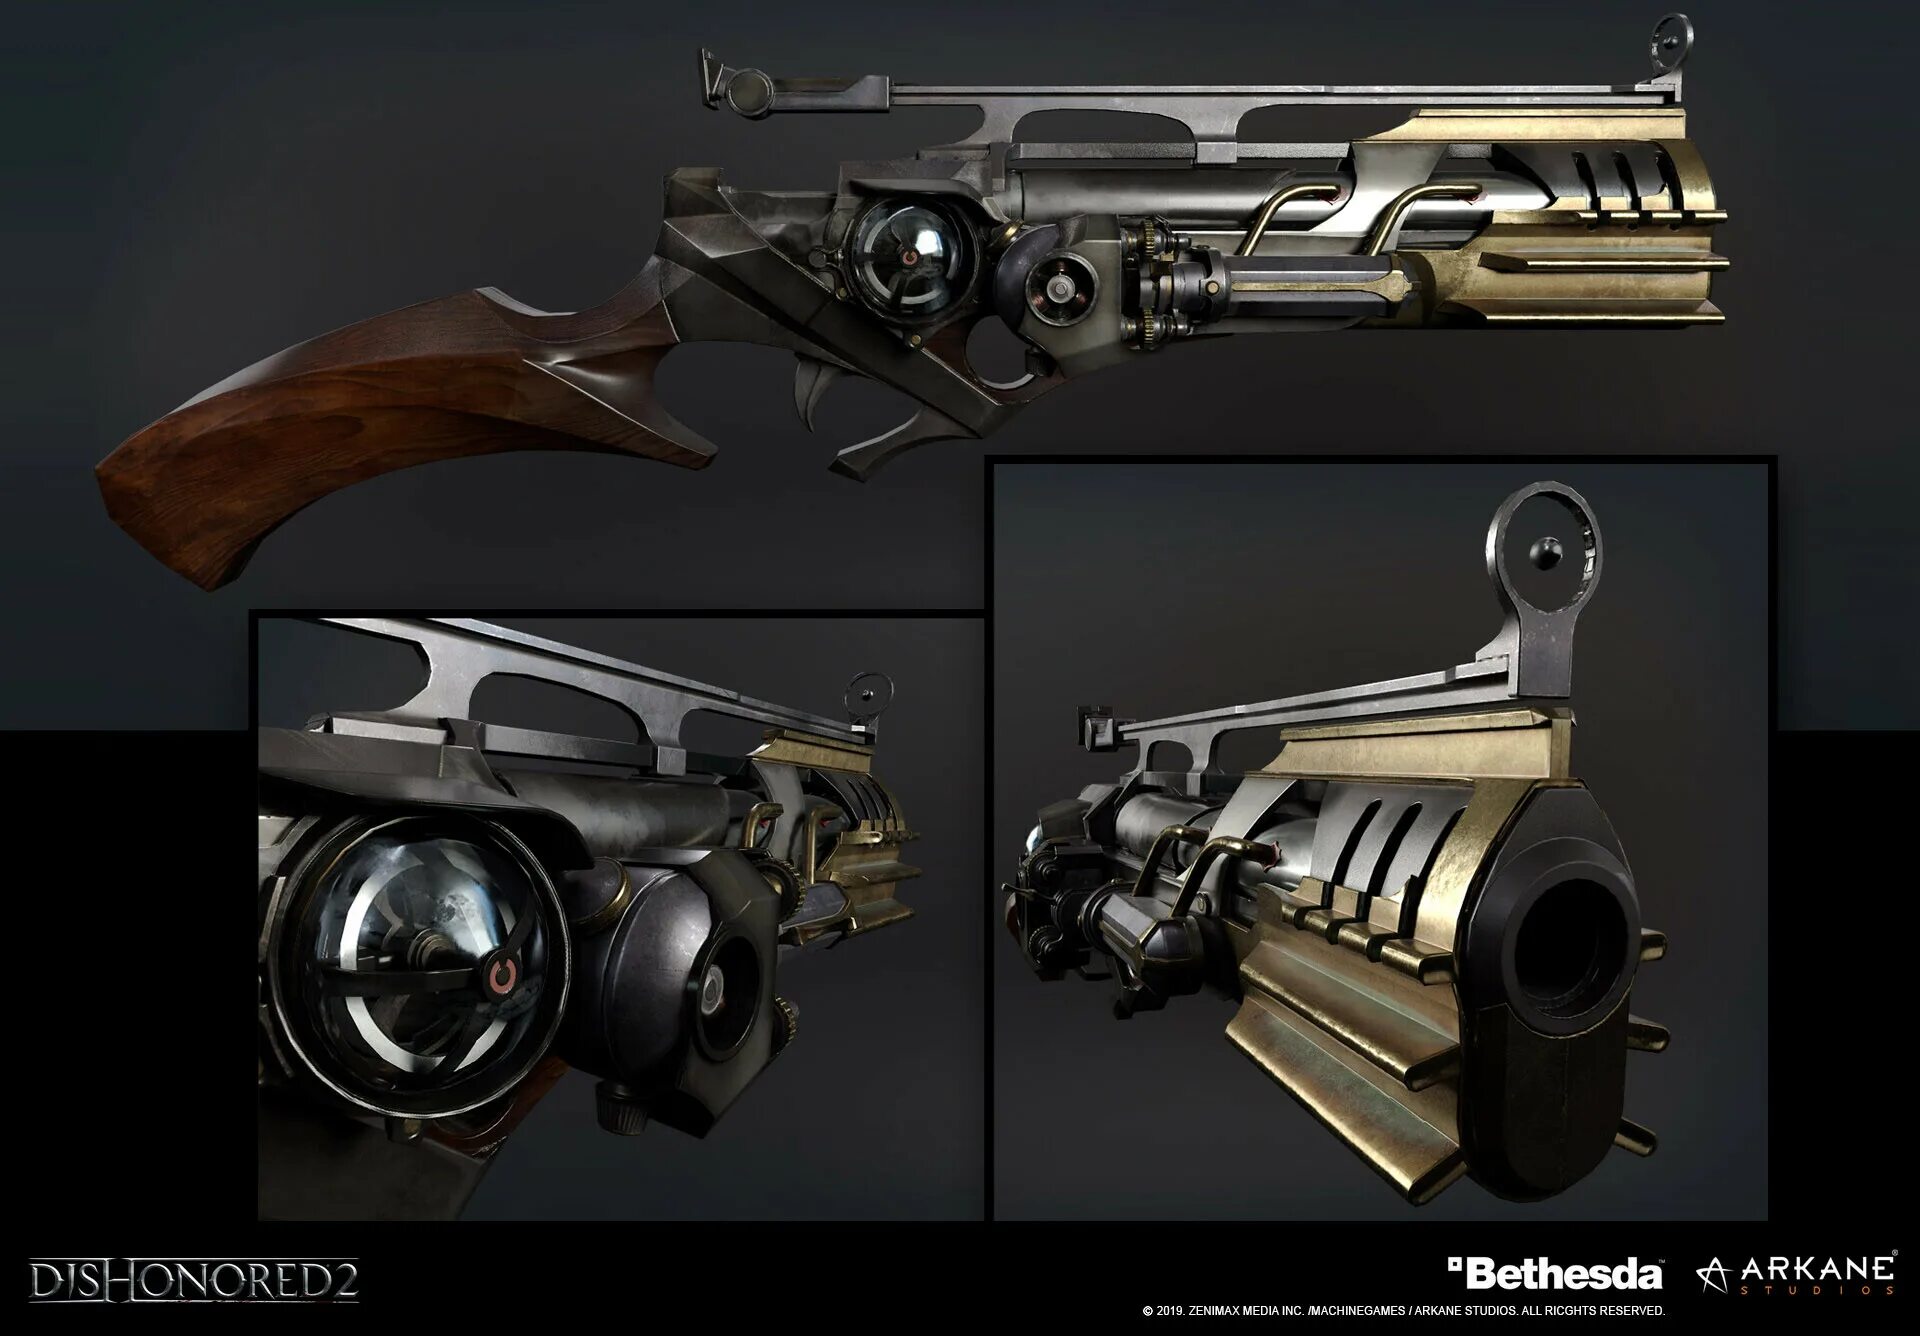 Dishonored 2 купить. Dishonored 2 Weapon Concept Art. Dishonored 2 оружие. Клинок из Dishonored 2.